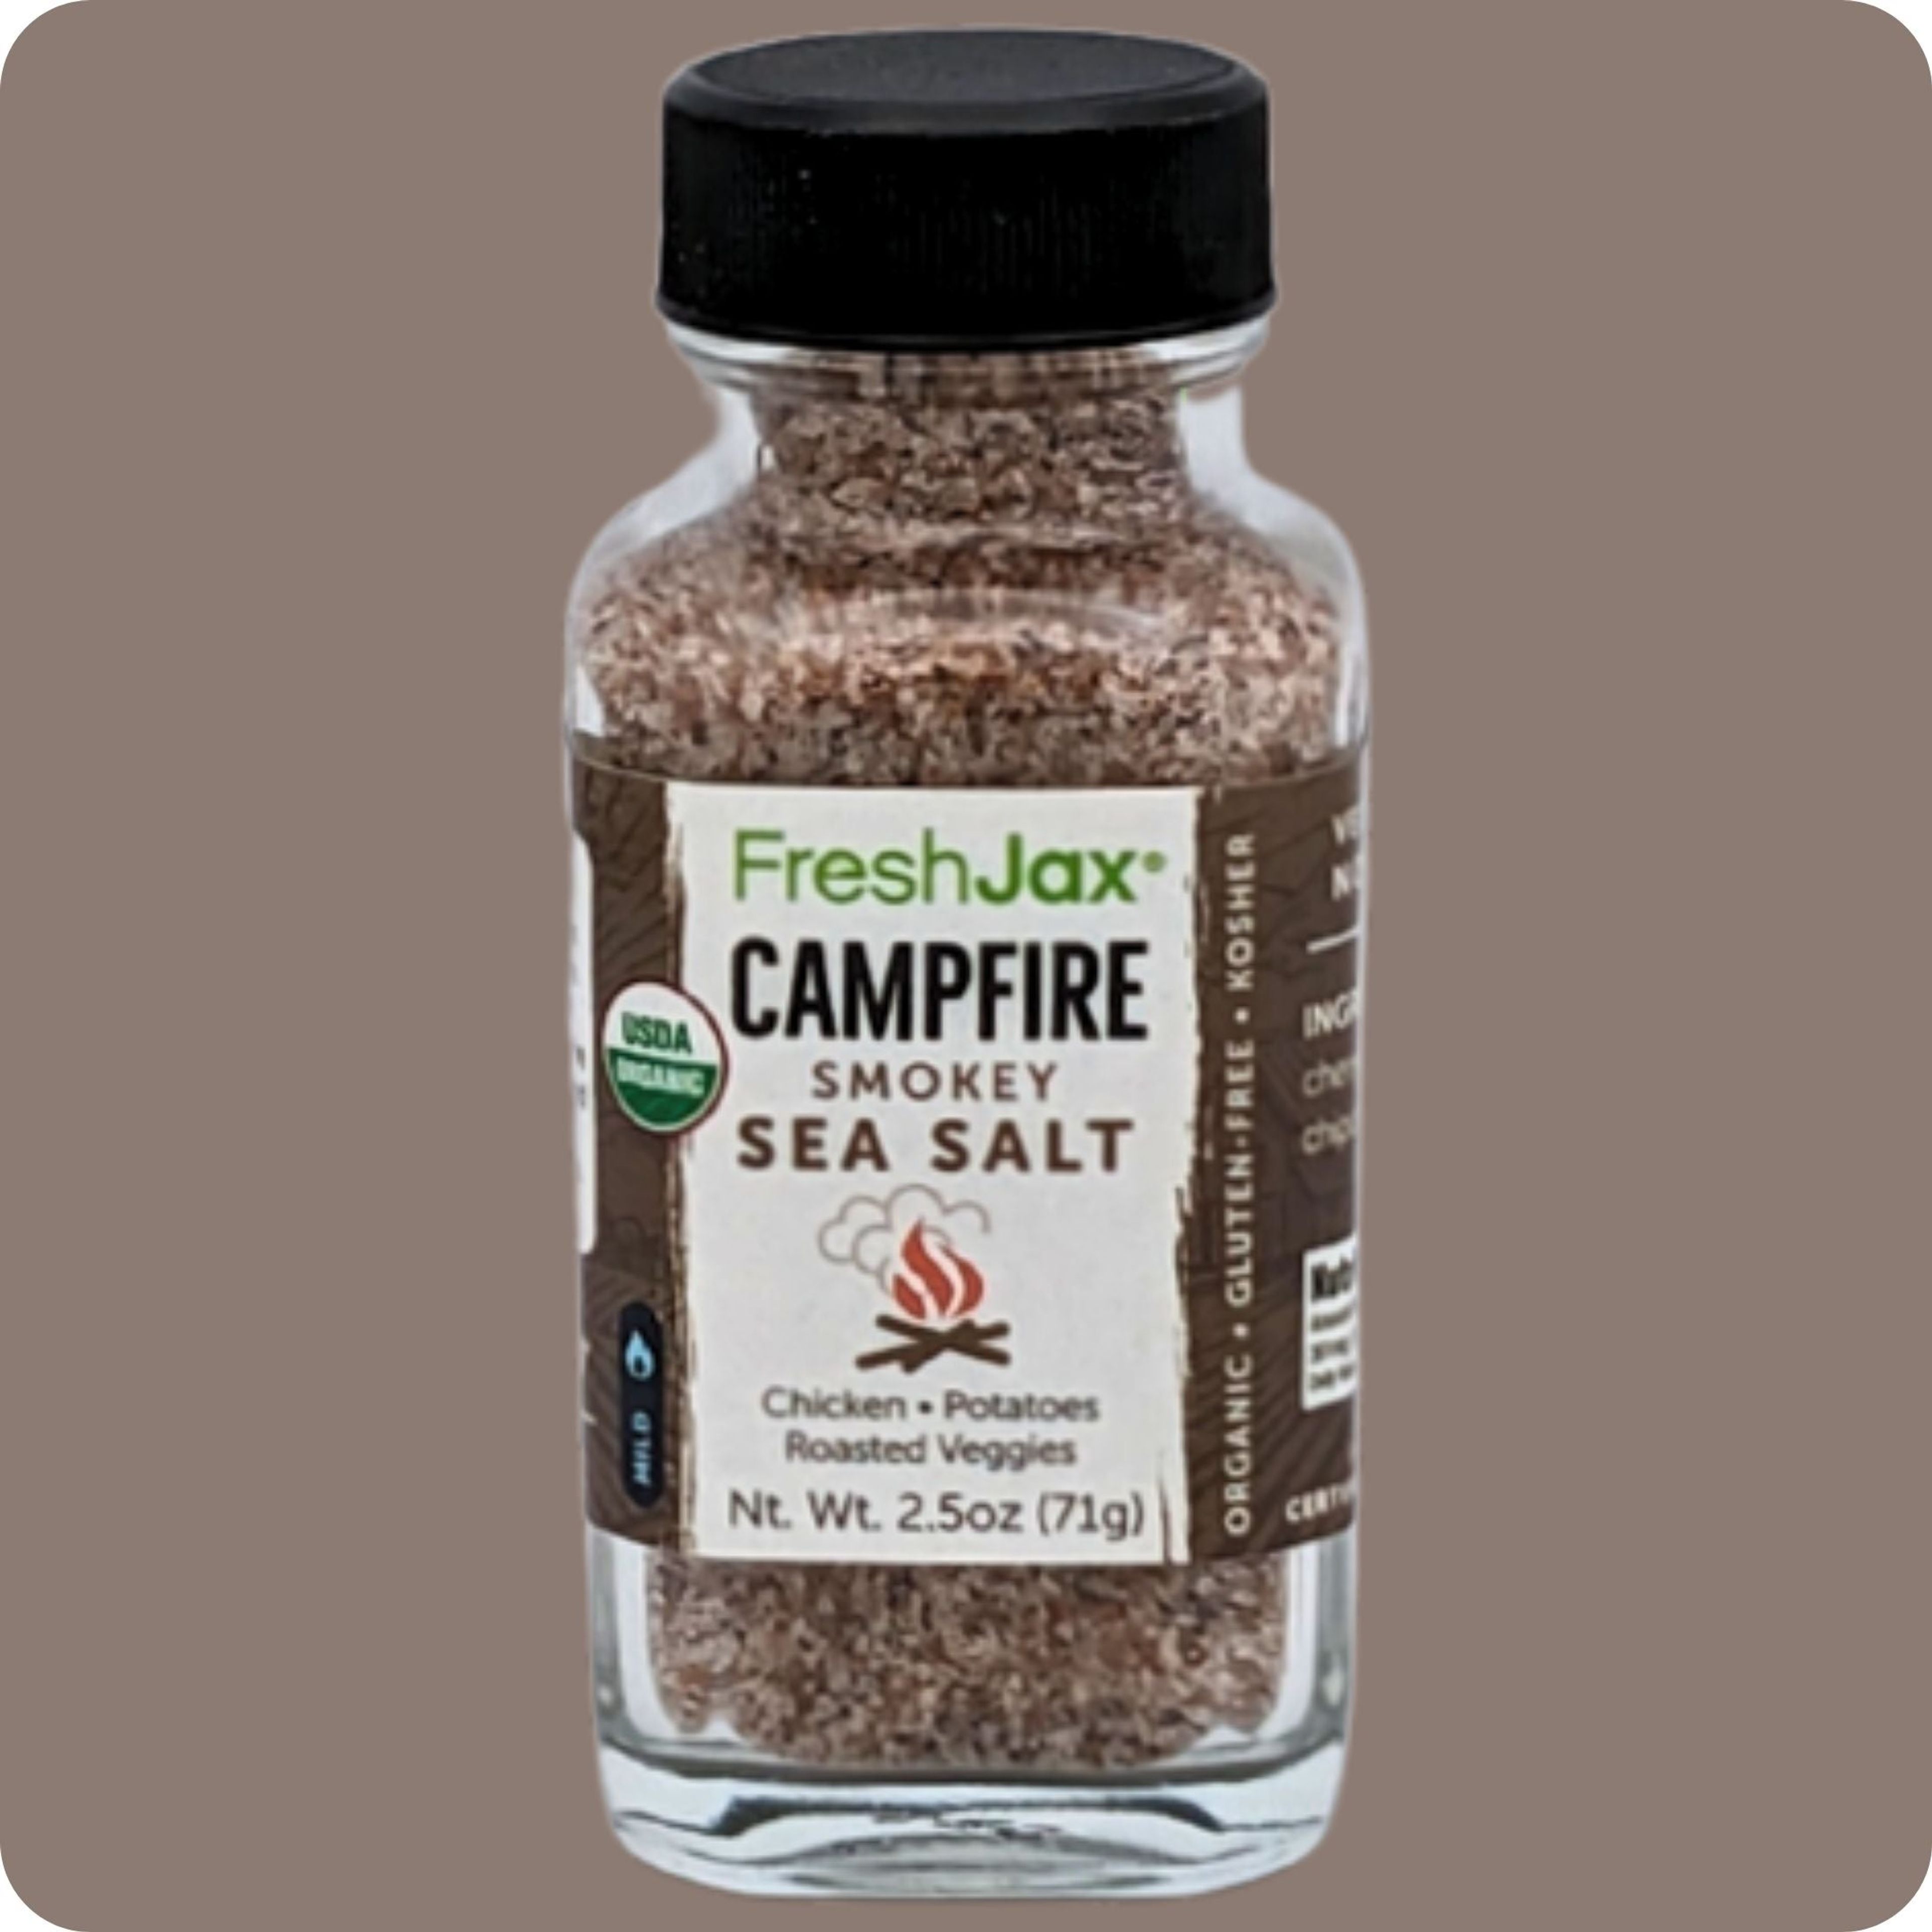 Campfire Smokey Sea Salt Organic